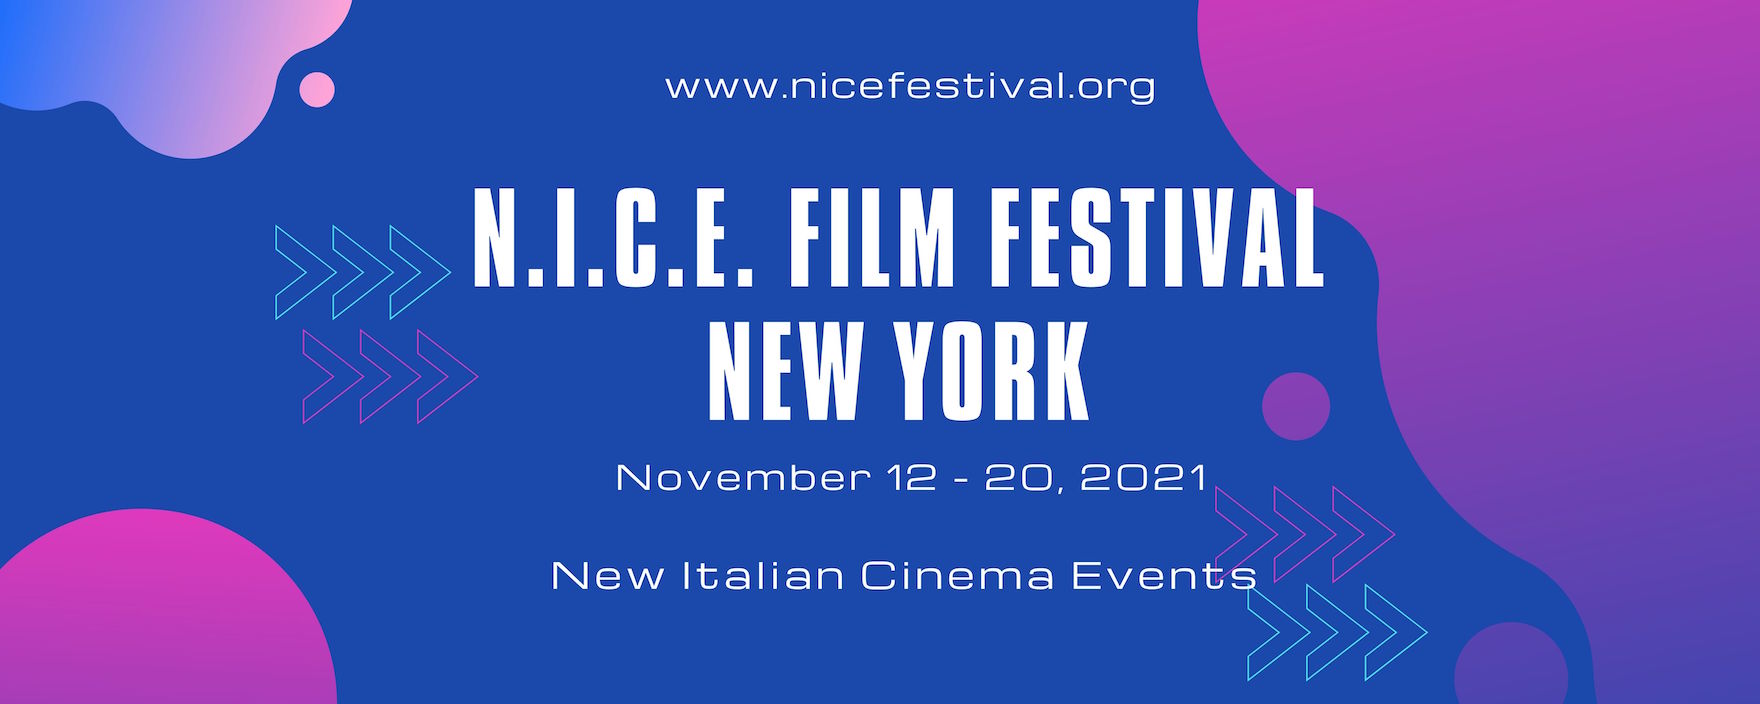 N.I.C.E. New Italian Cinema Events 2021 New York